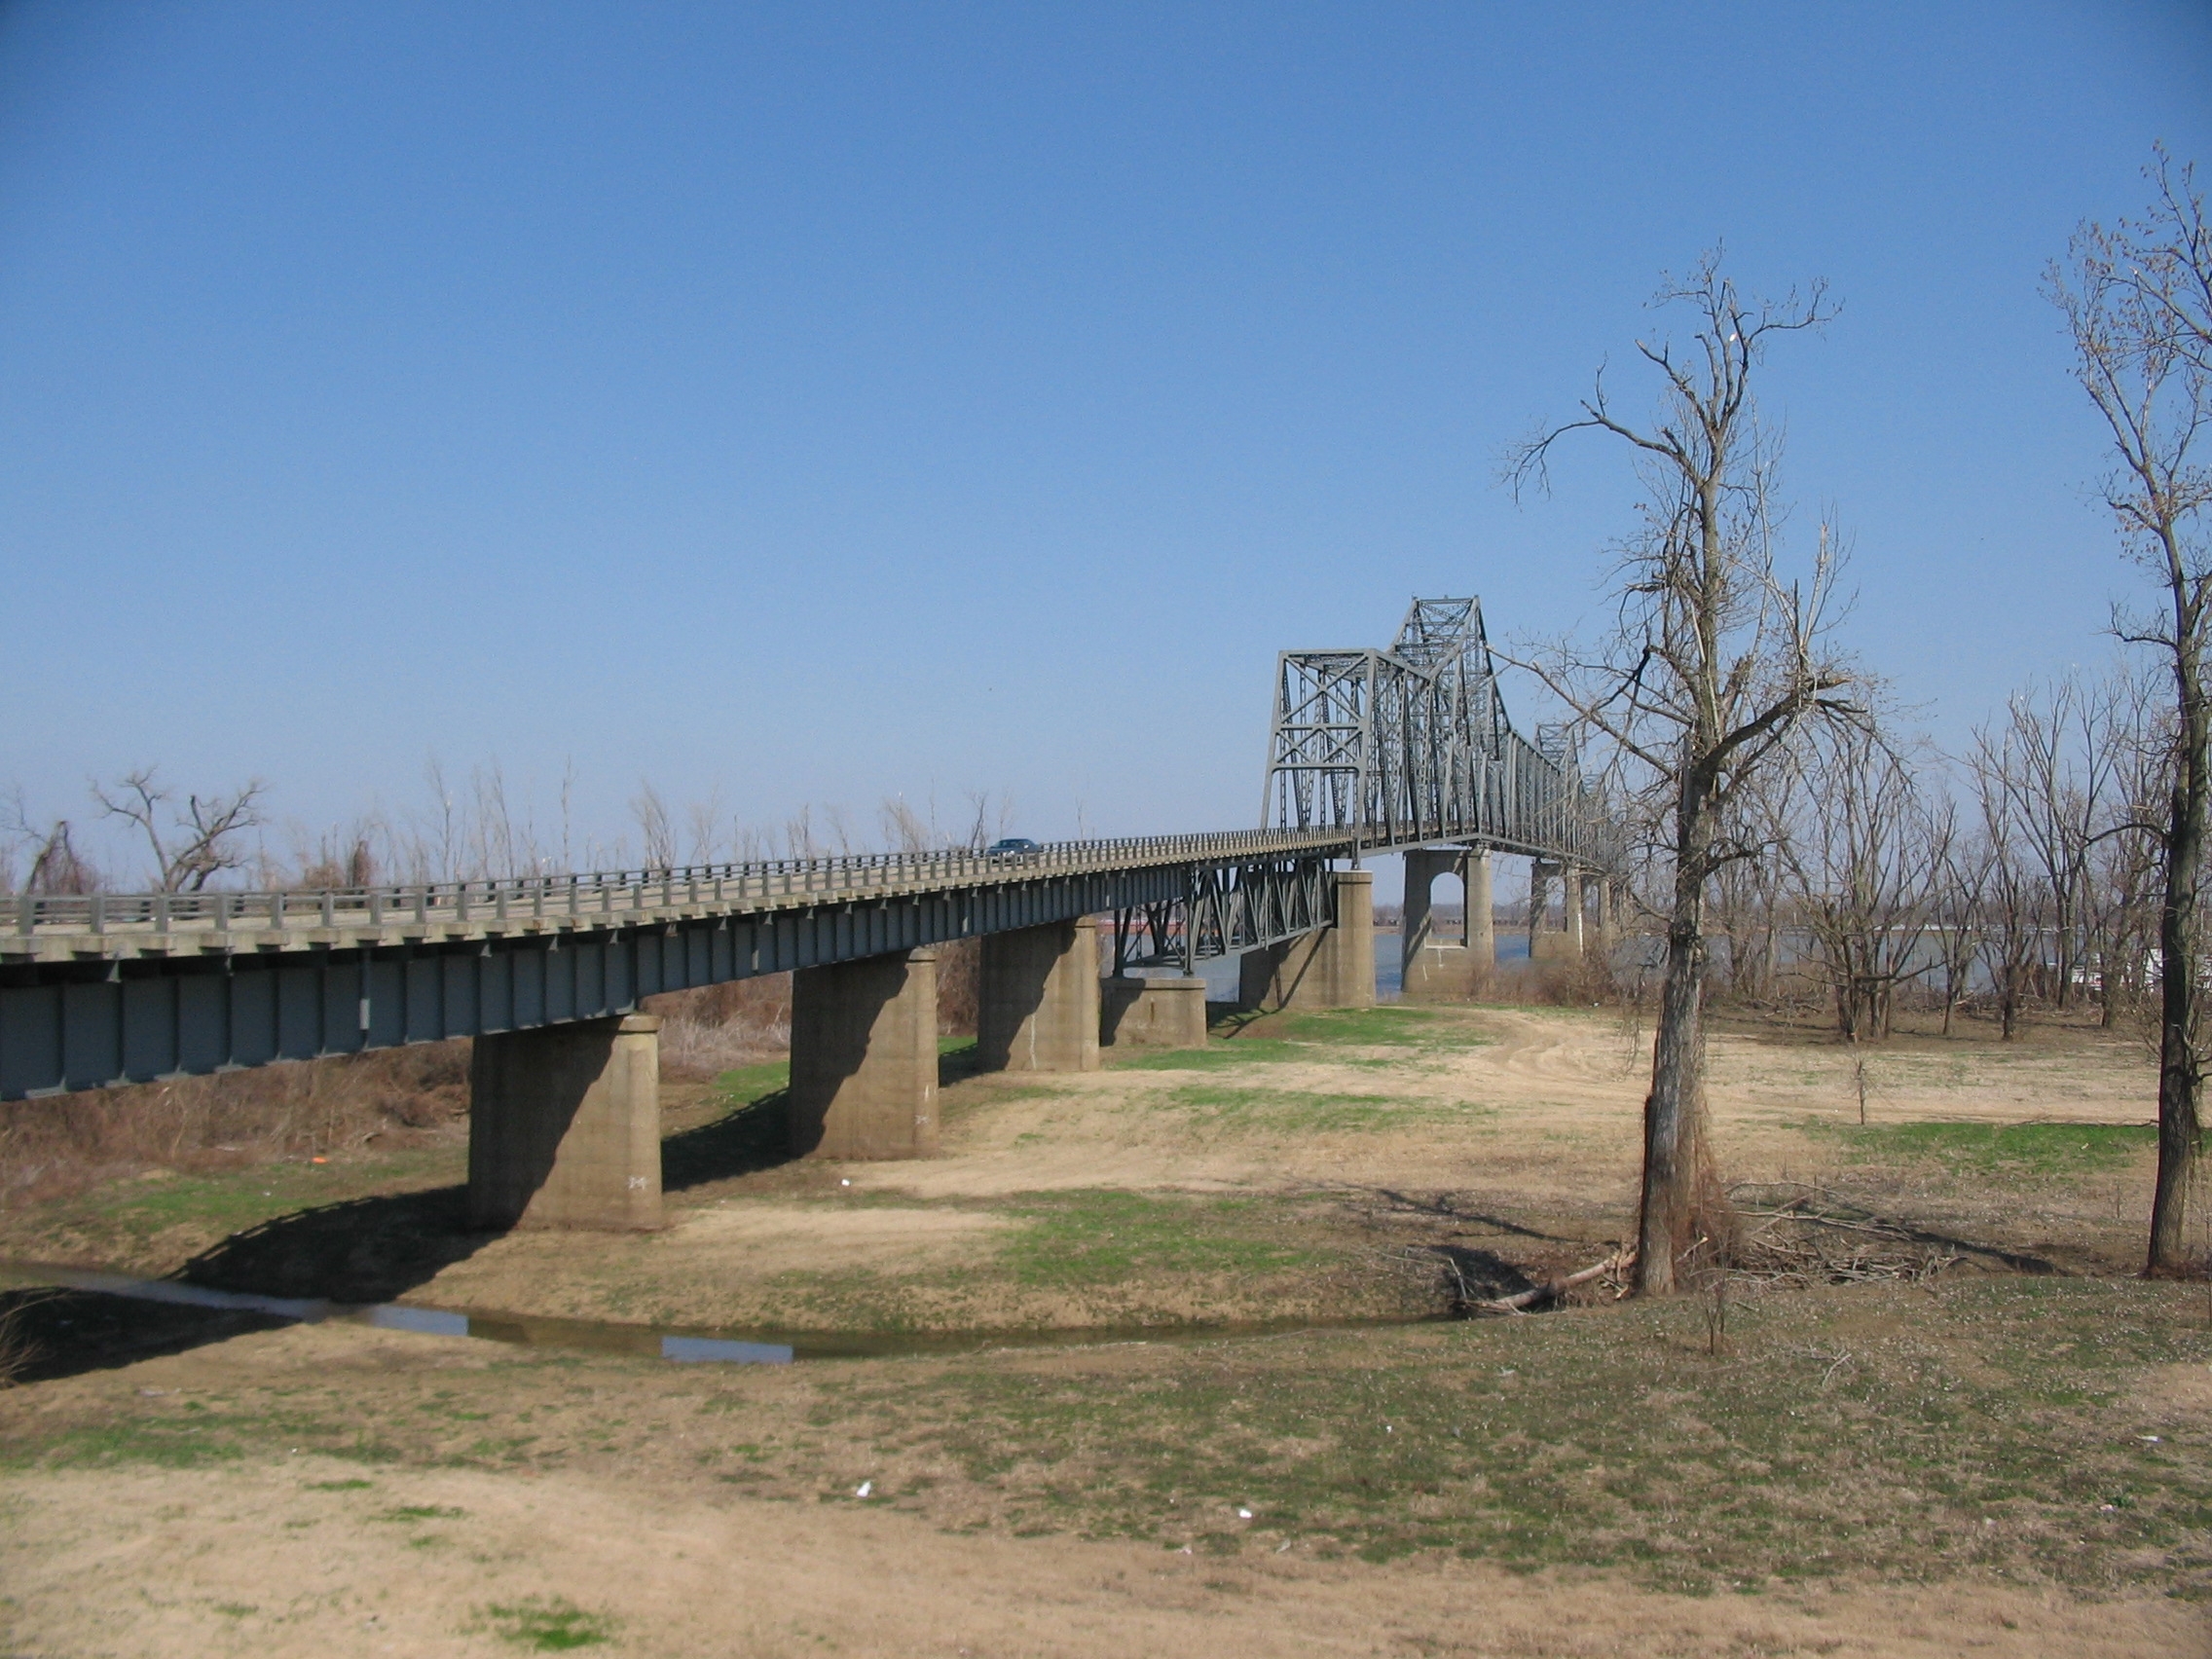 The Ohio River Bridge